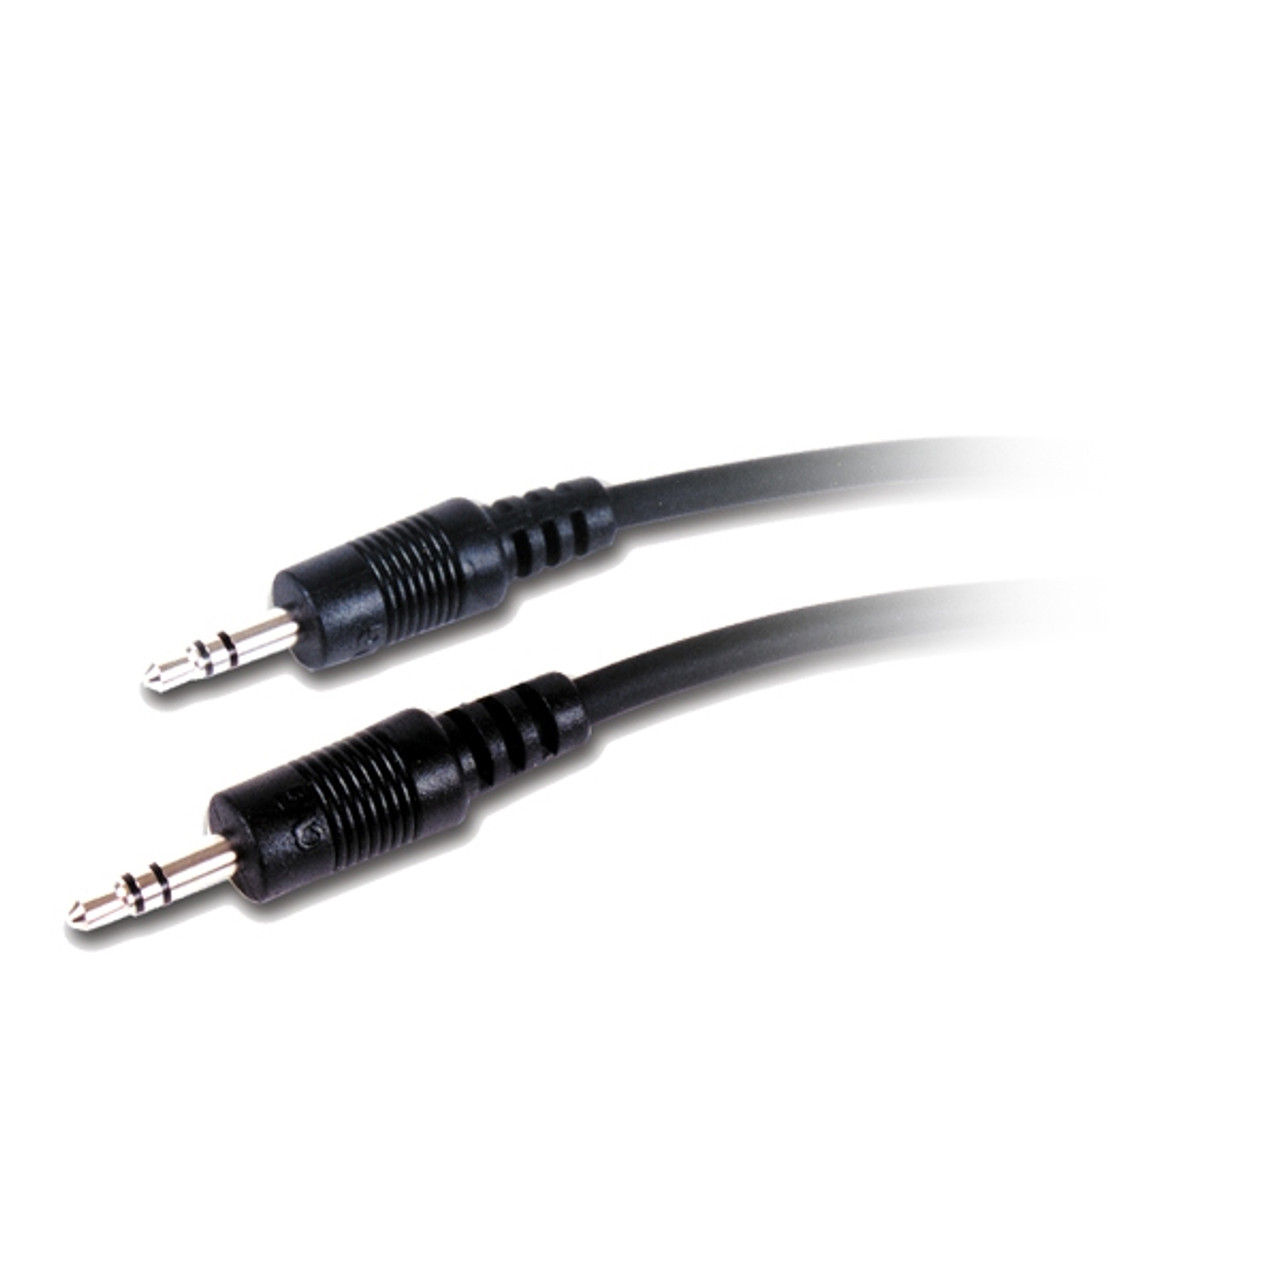 Cable Jack 3.5 Macho Macho, HiFi Estéreo Cable Audio Jack 3.5,Nylon  Trenzado Cable Mini Jack a Mini Jack, Cable Auxiliar Compatible Coche,  Autoradio